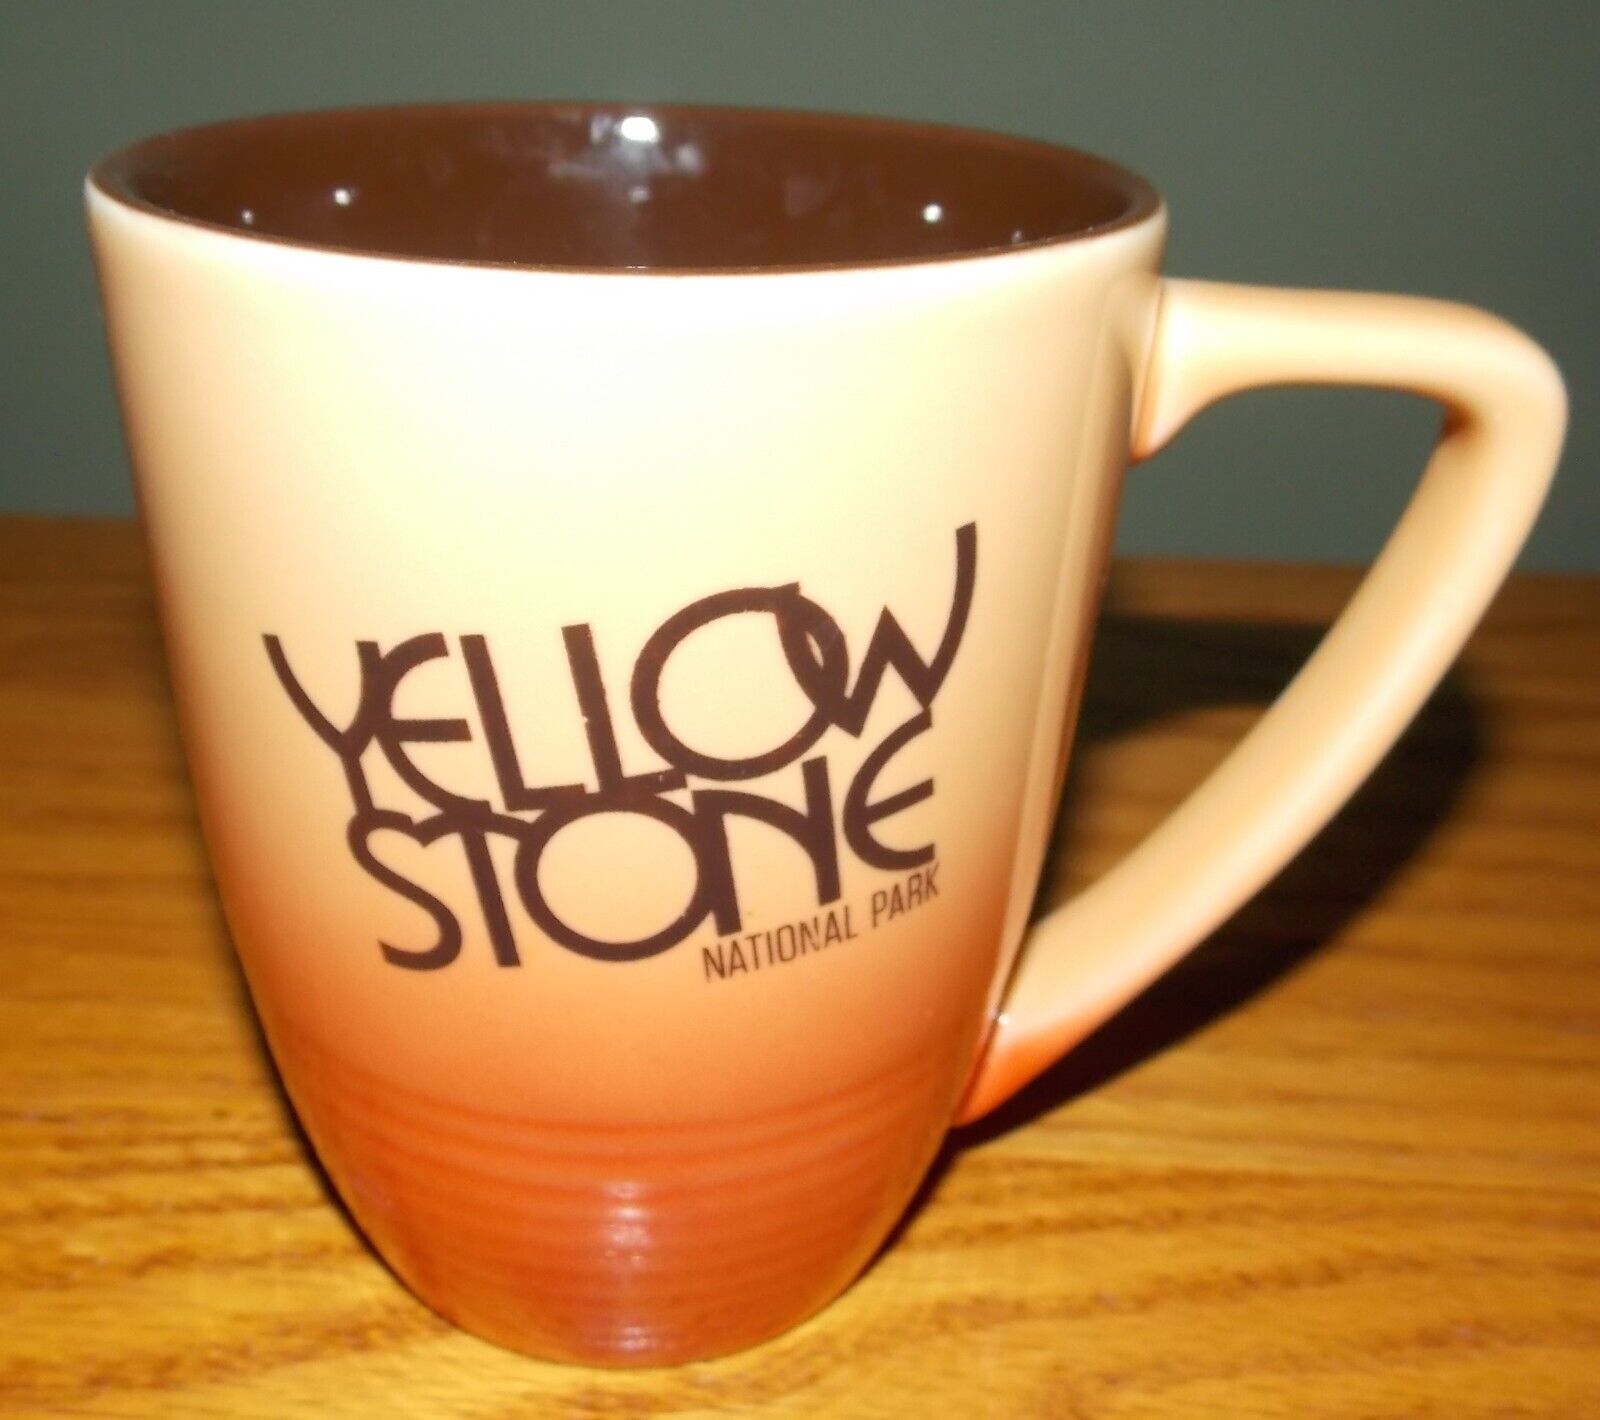 Yellowstone National Park Mug Cup Orange Ombre Embossed Ribbing Brown Interior